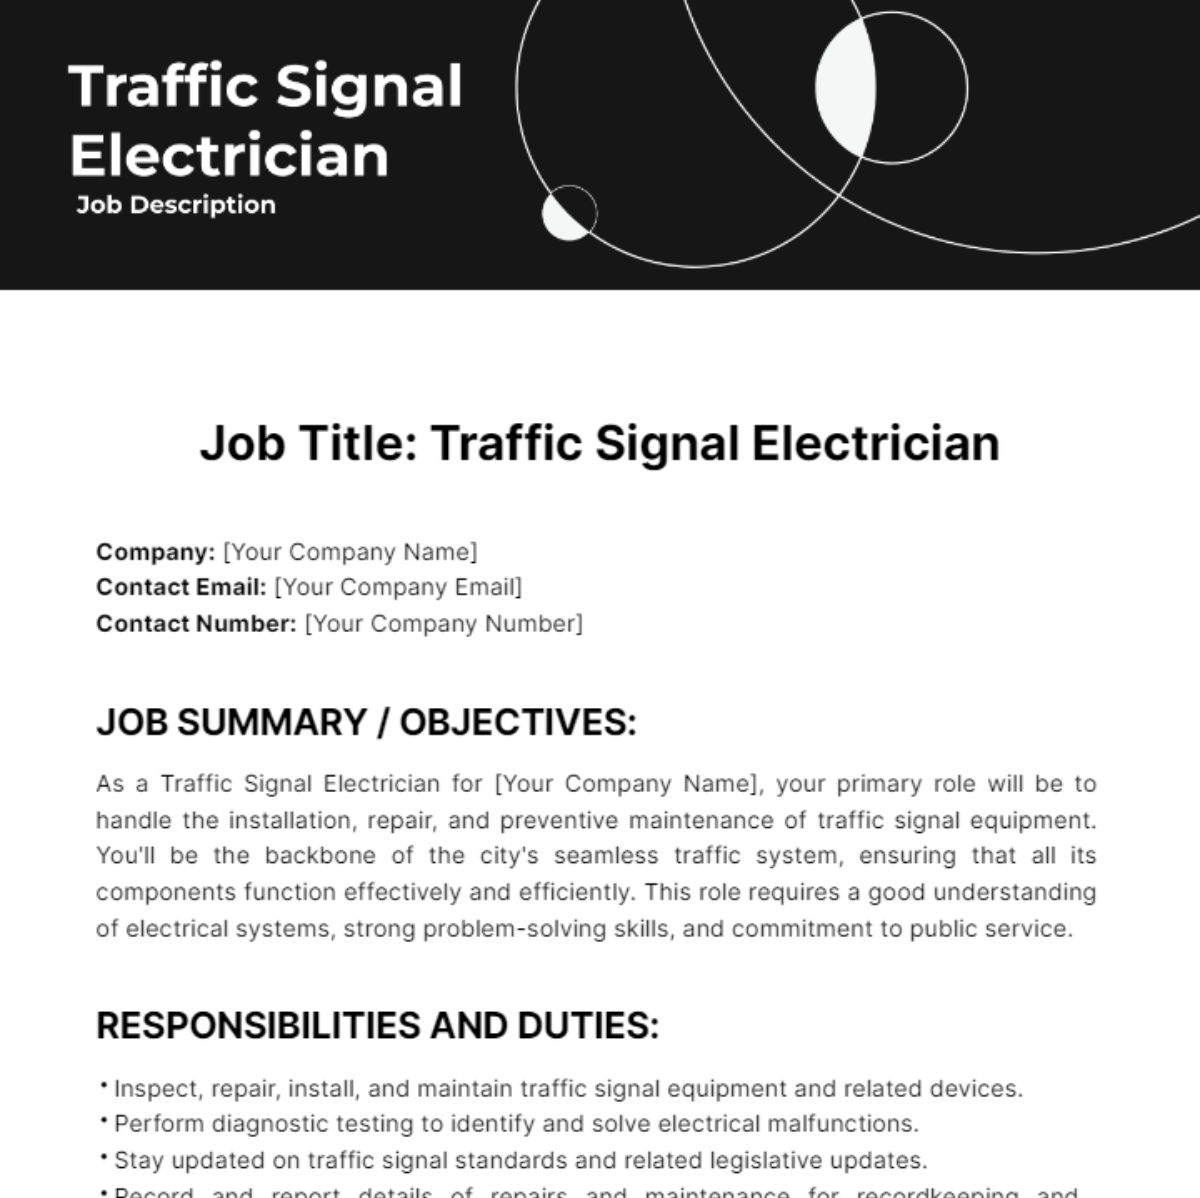 Traffic Signal Electrician Job Description Template